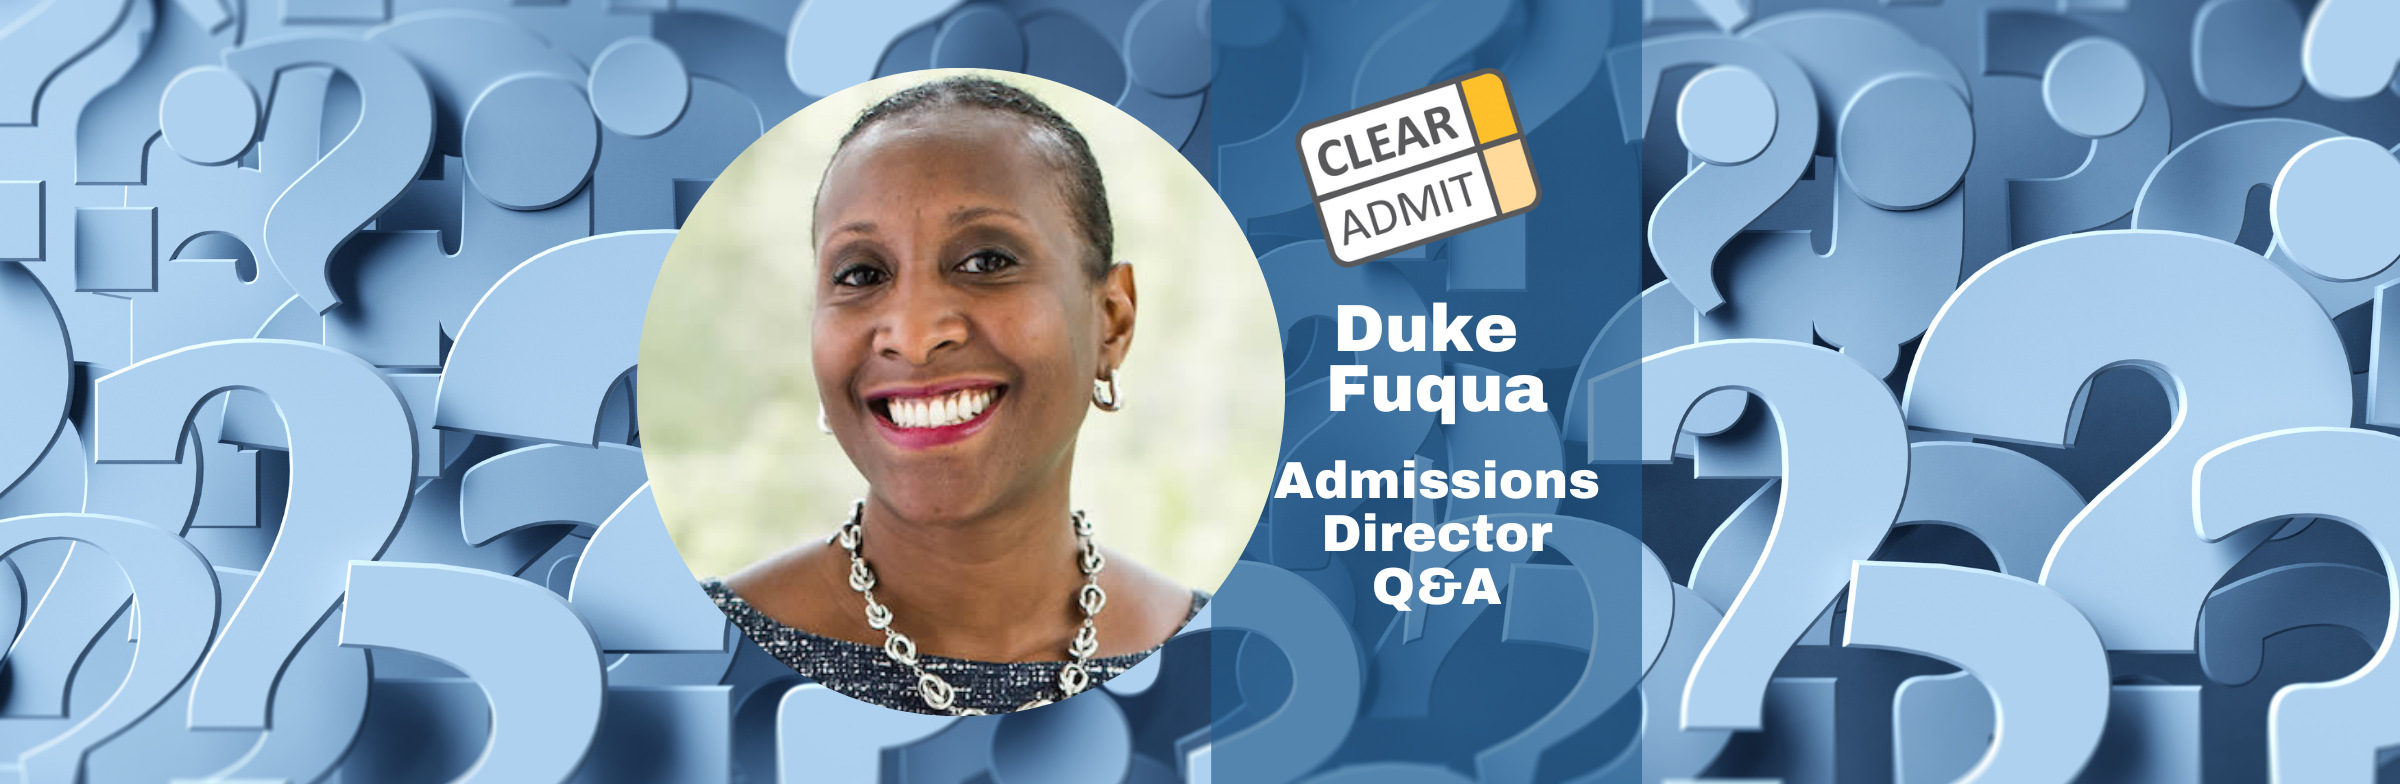 Image for Admissions Director Q&A: Shari Hubert of Duke University’s Fuqua School of Business